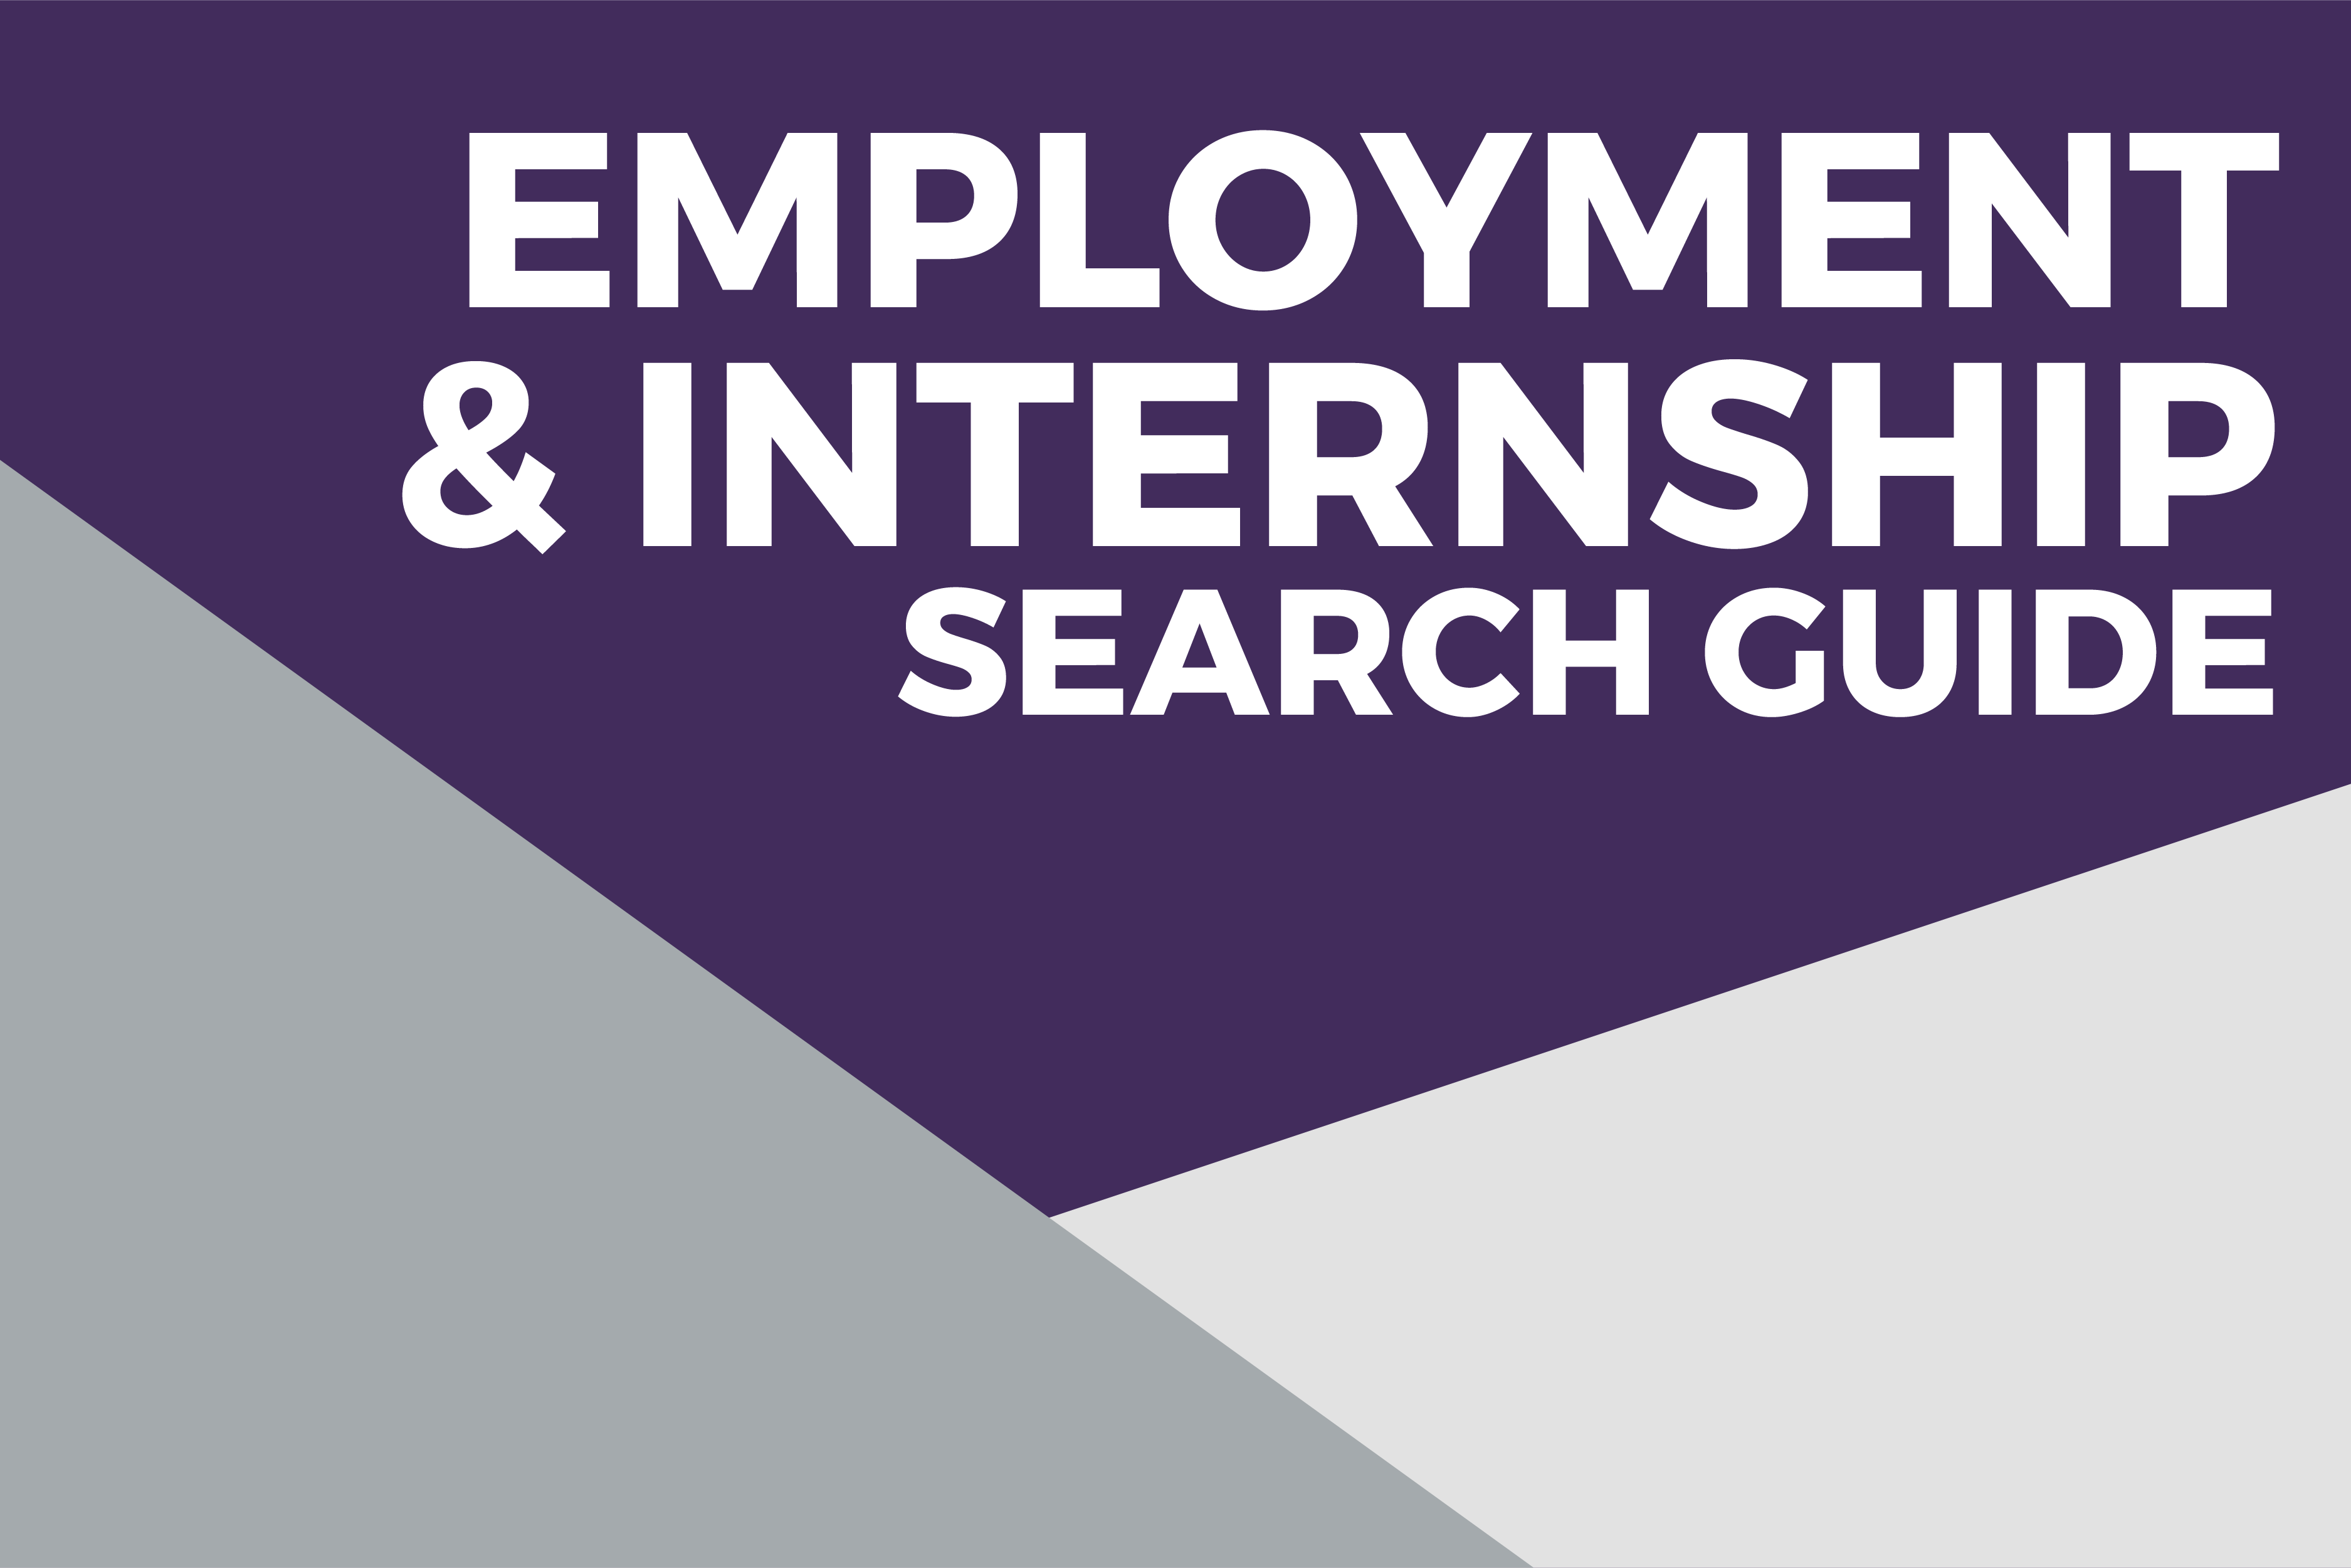 Employment & internship search guide